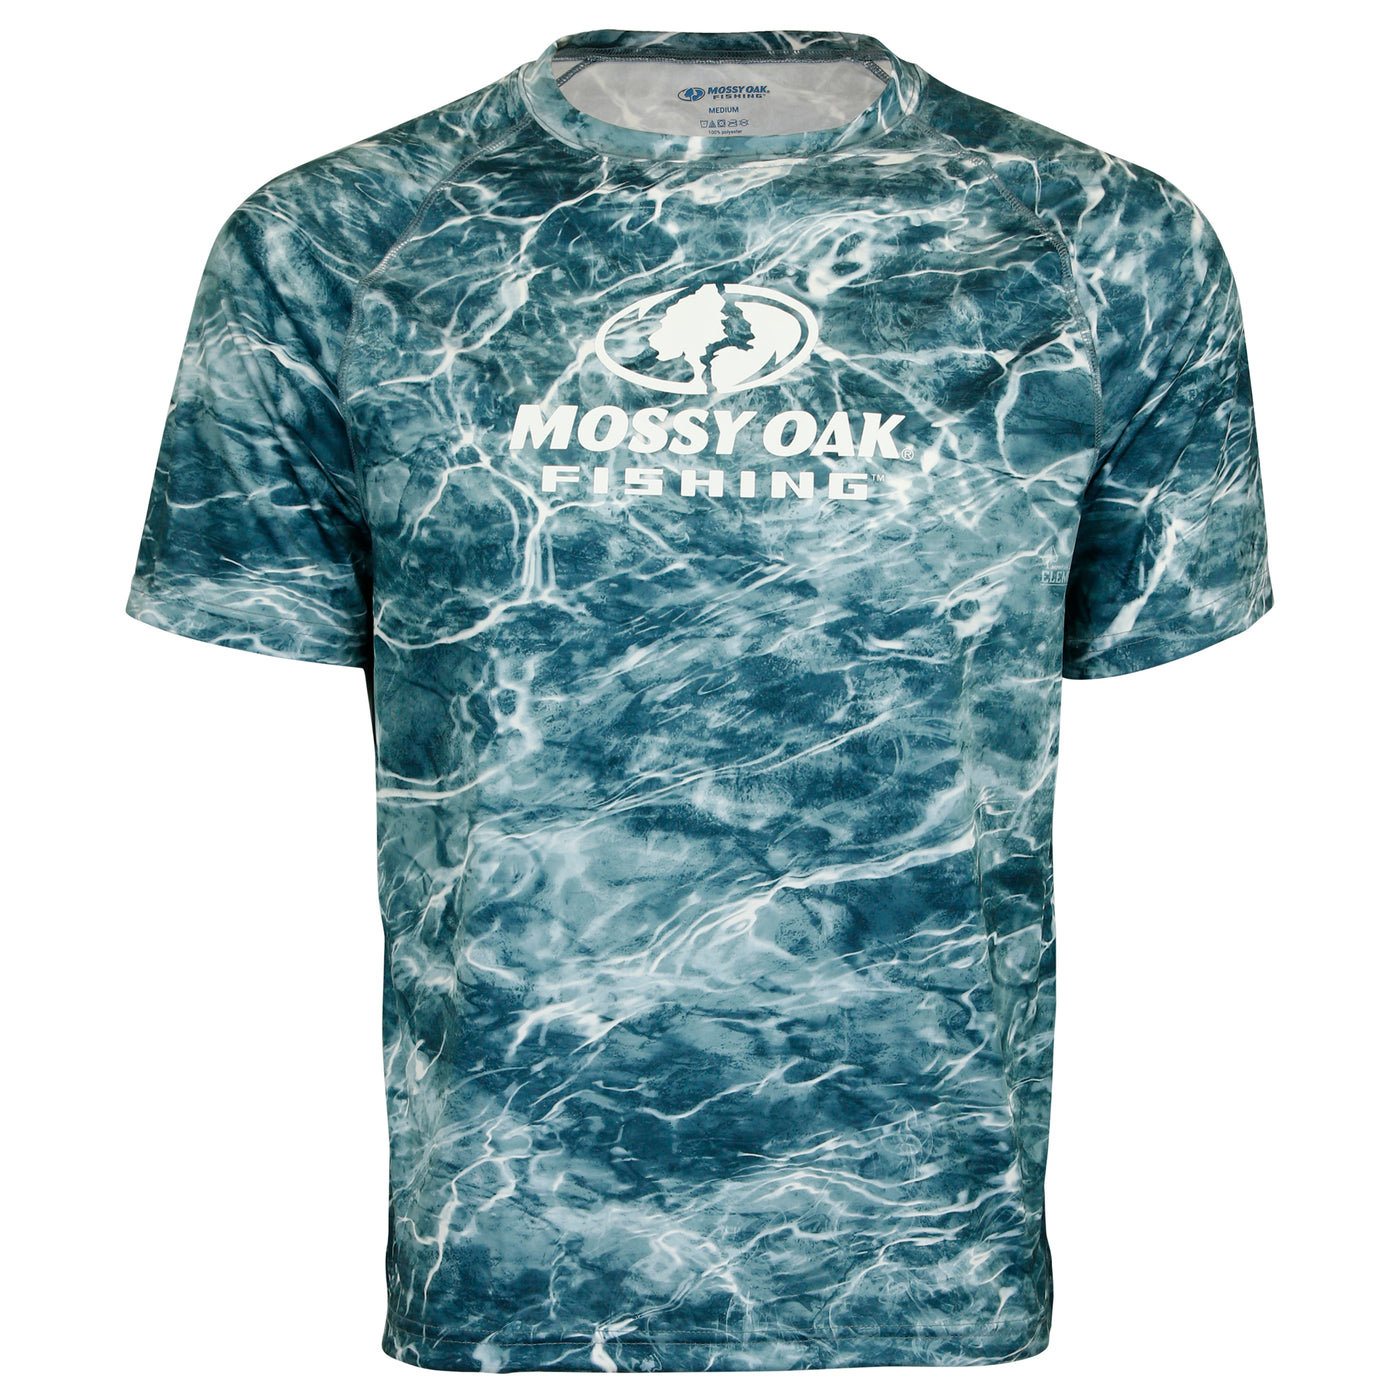 Mossy Oak Fishing Elements Logo Long Sleeve Shirt